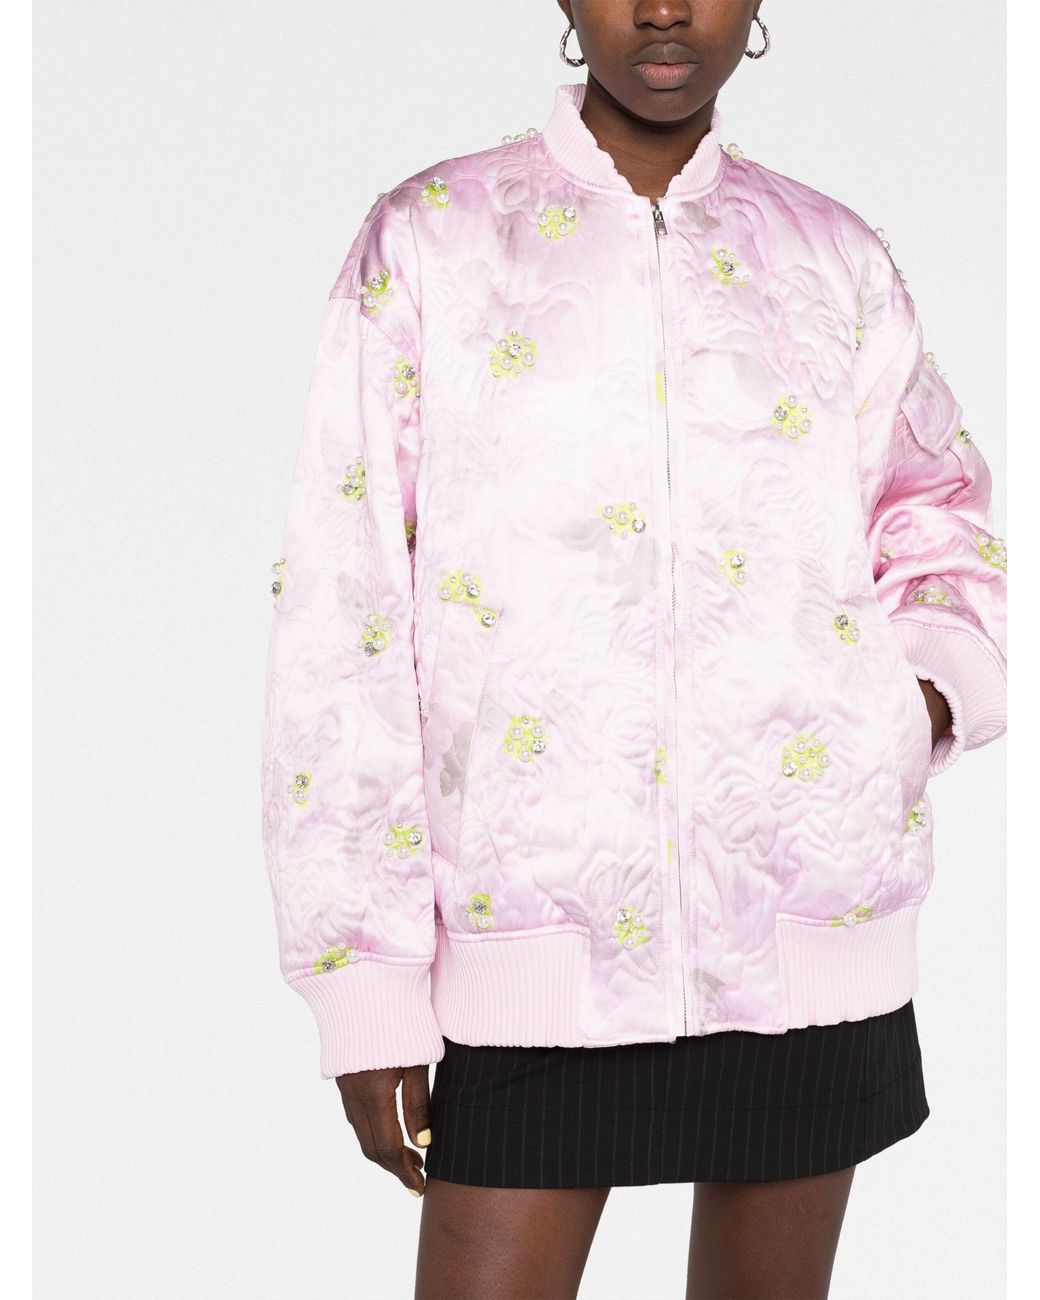 Stine Goya Norea Floral Crystal Bomber Jacket in Pink | Lyst Australia